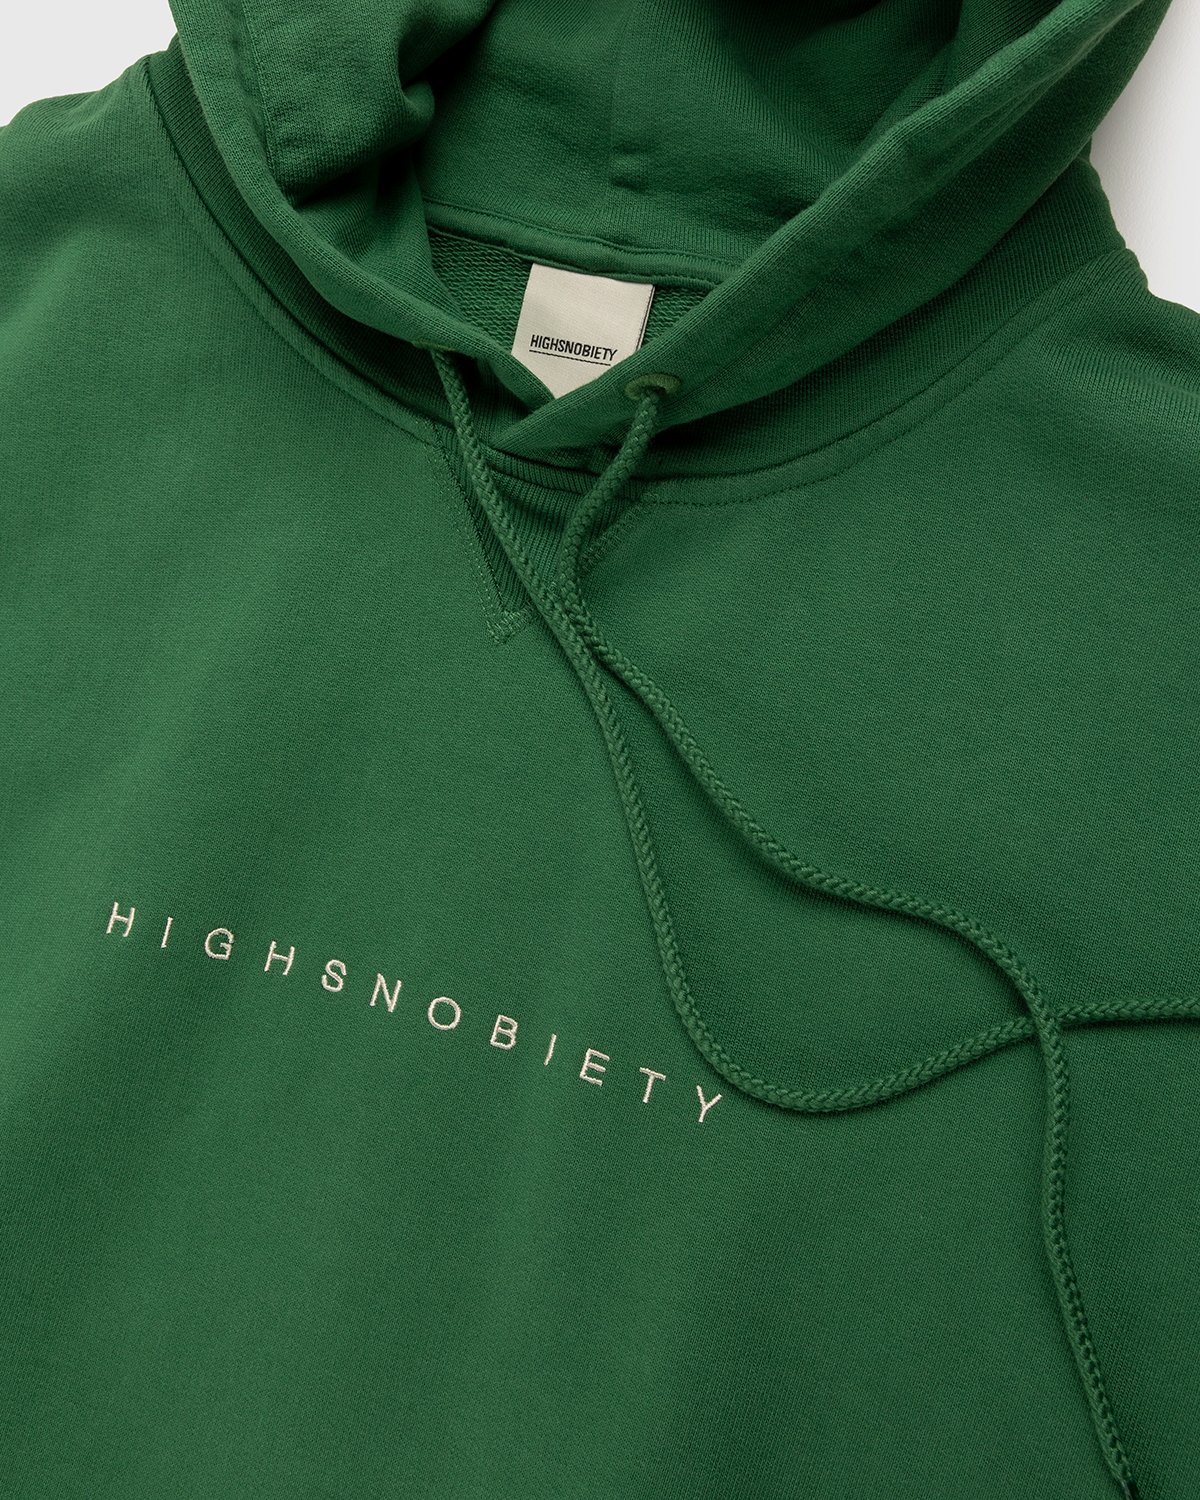 Highsnobiety - Staples Hoodie Lush Green - Clothing - Green - Image 3